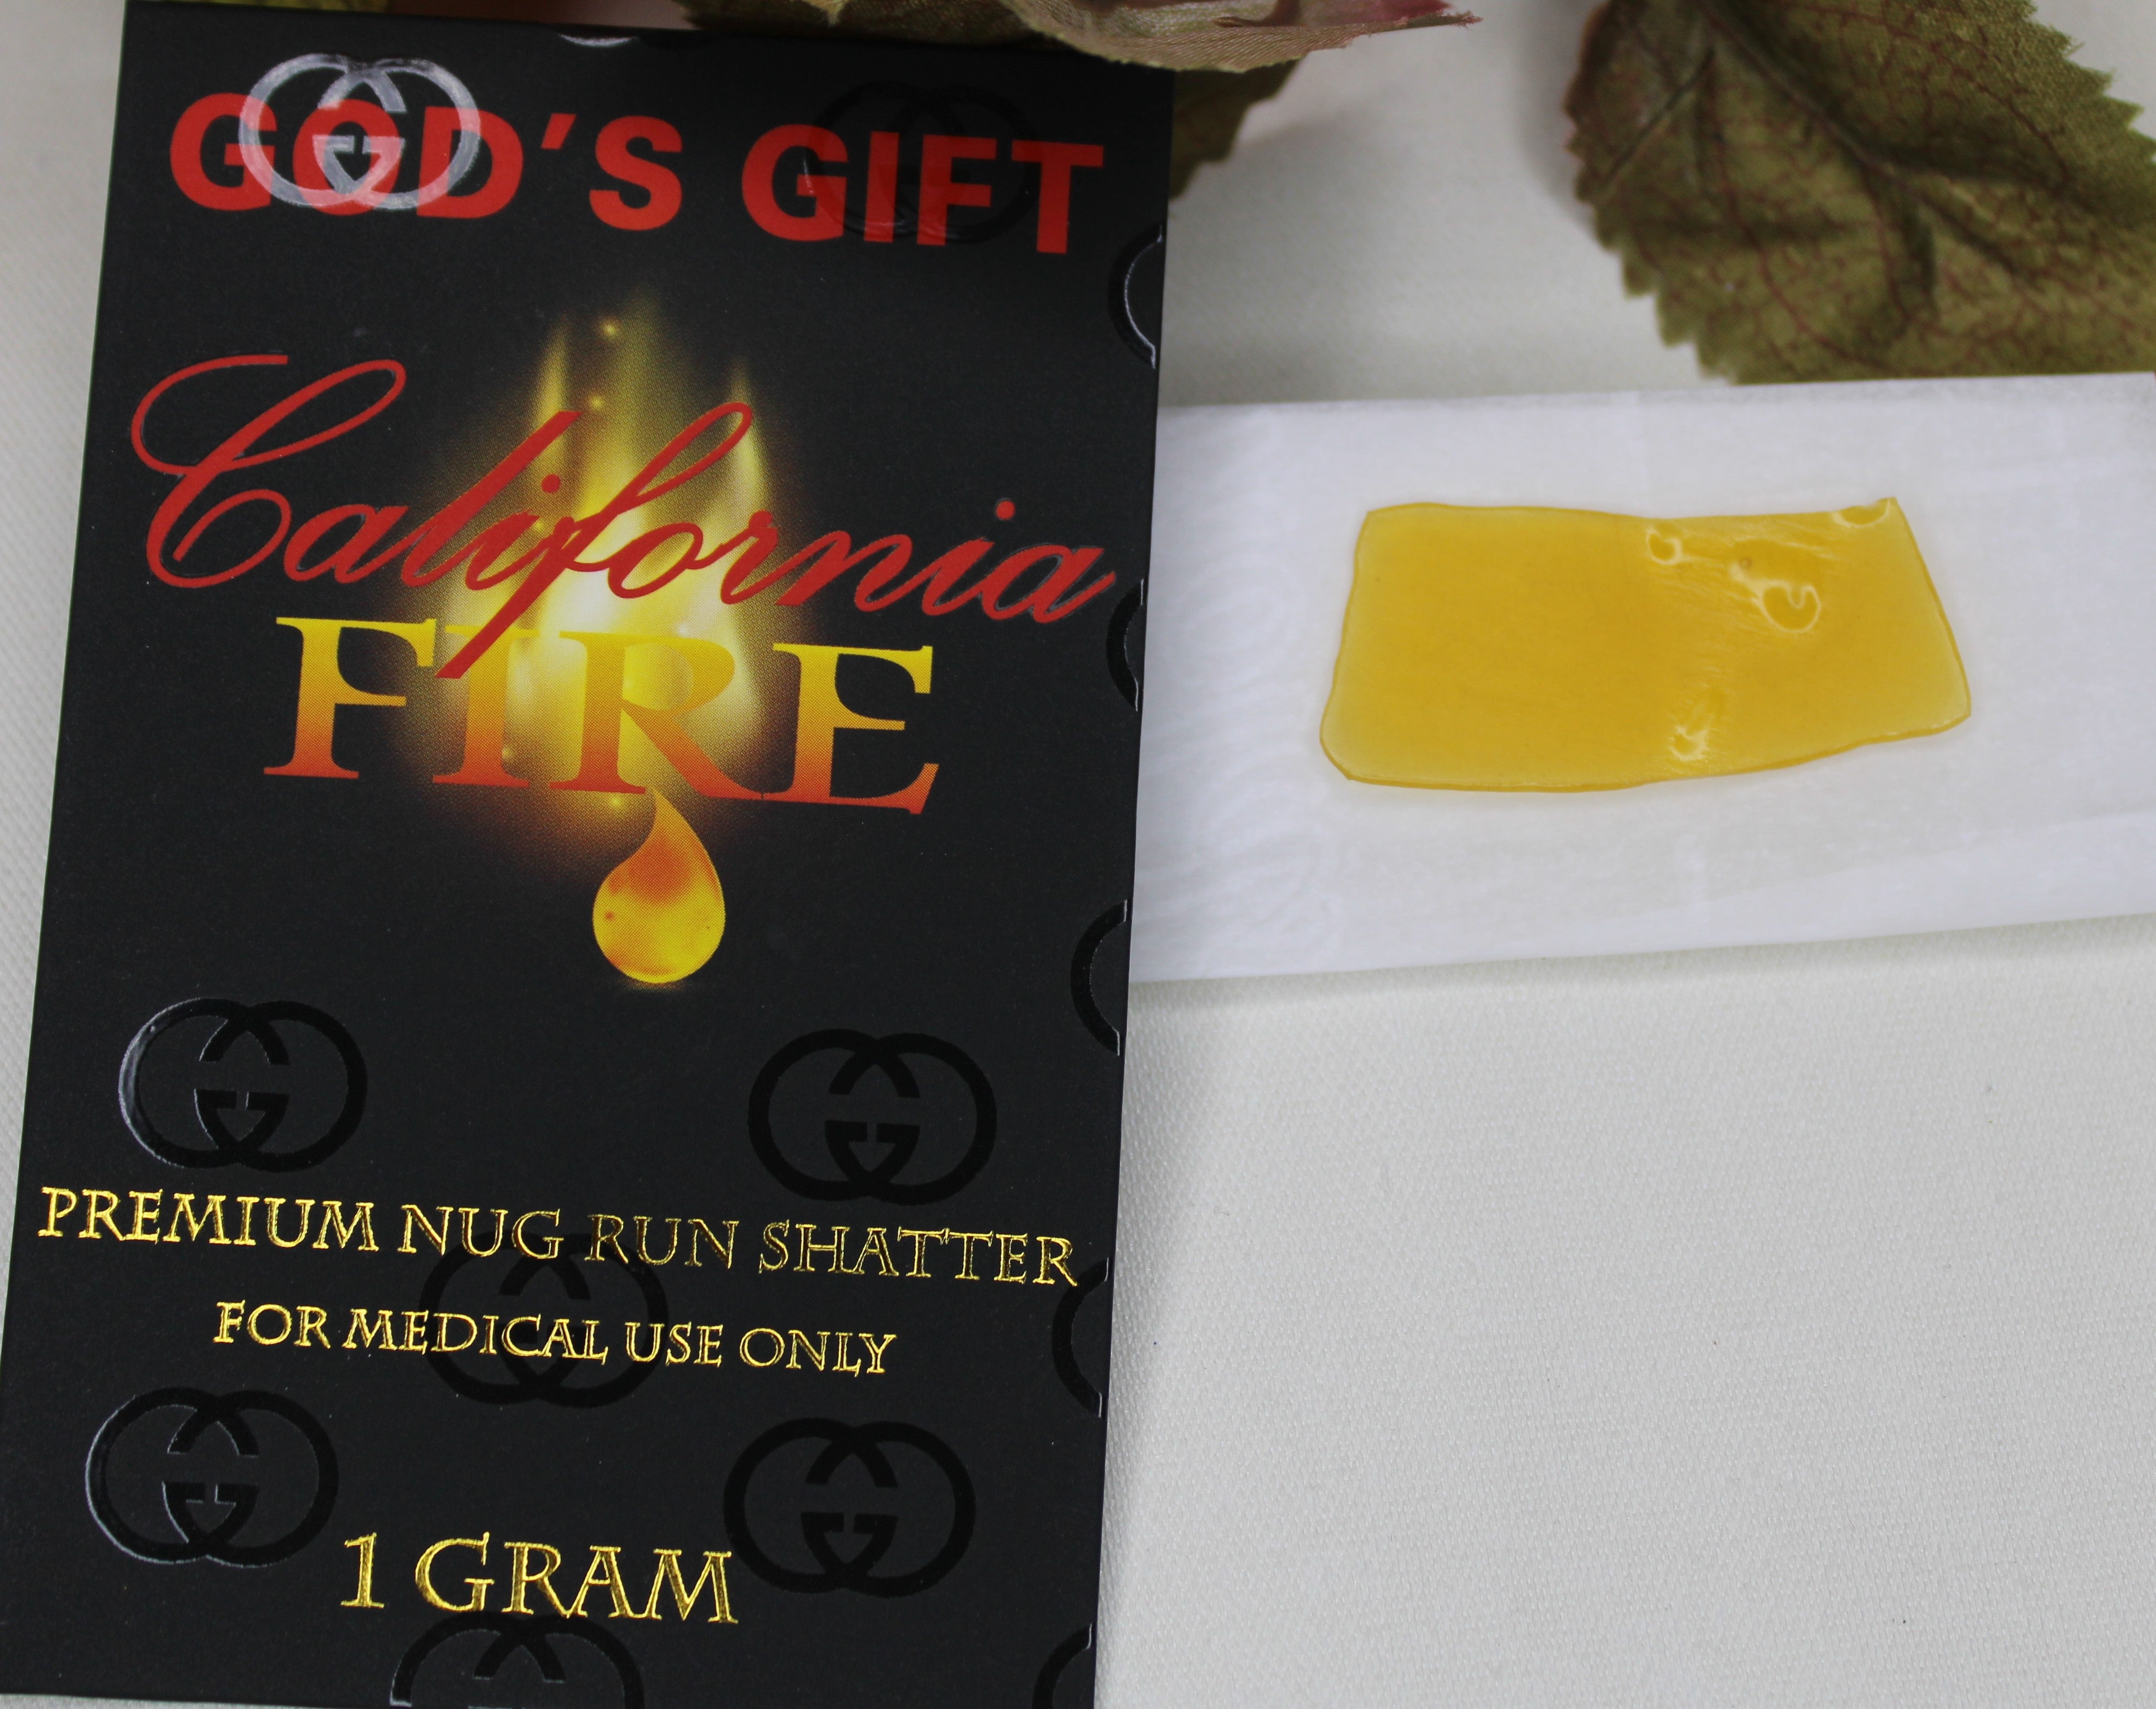 California Fire Premium Nug Run Shatter "Gods Gift" (1g)